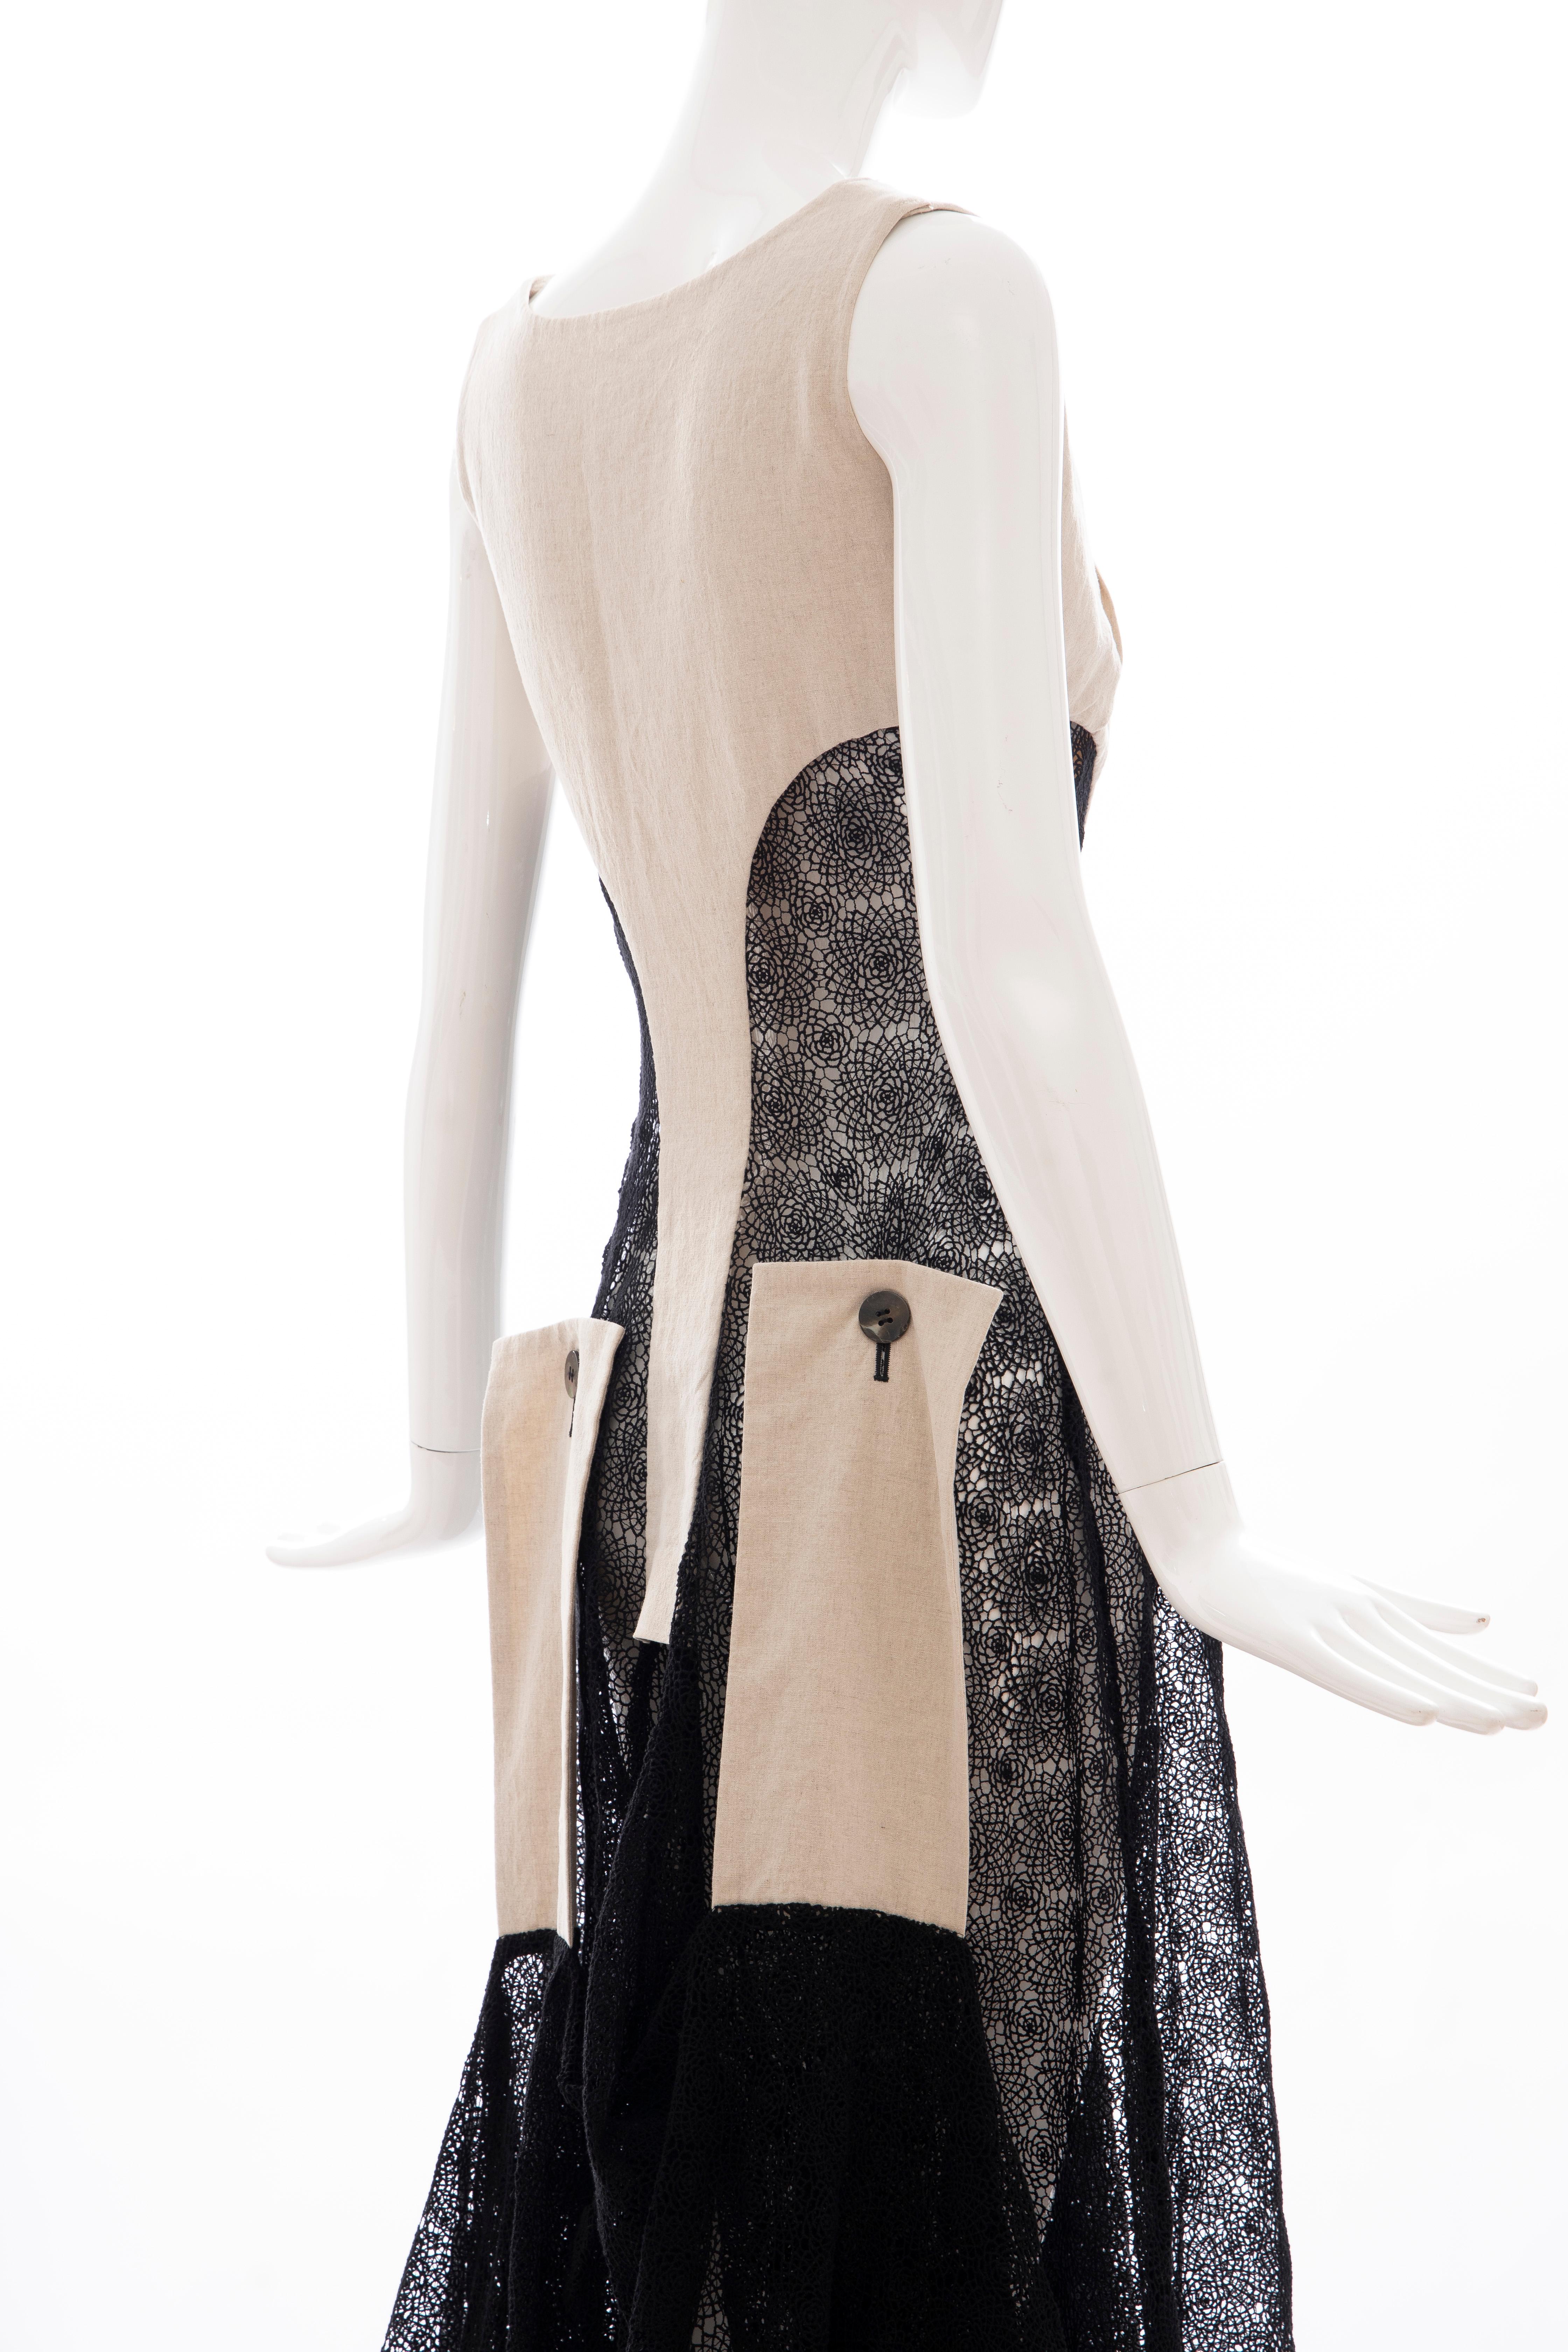 Yohji Yamamoto Runway Black Cotton Lace & Natural Linen Dress, Spring 2005 5